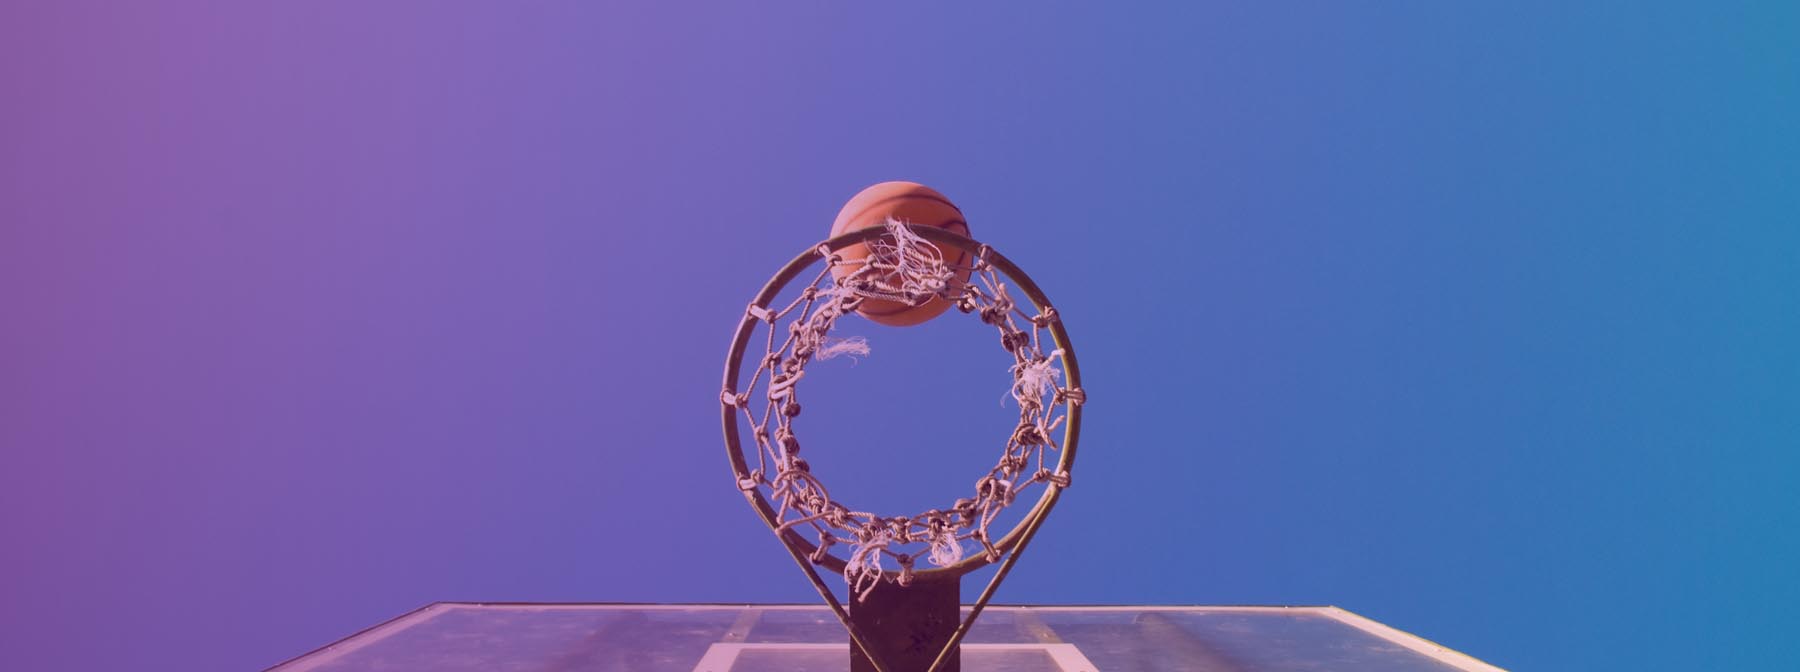 Career goals image of a trophy